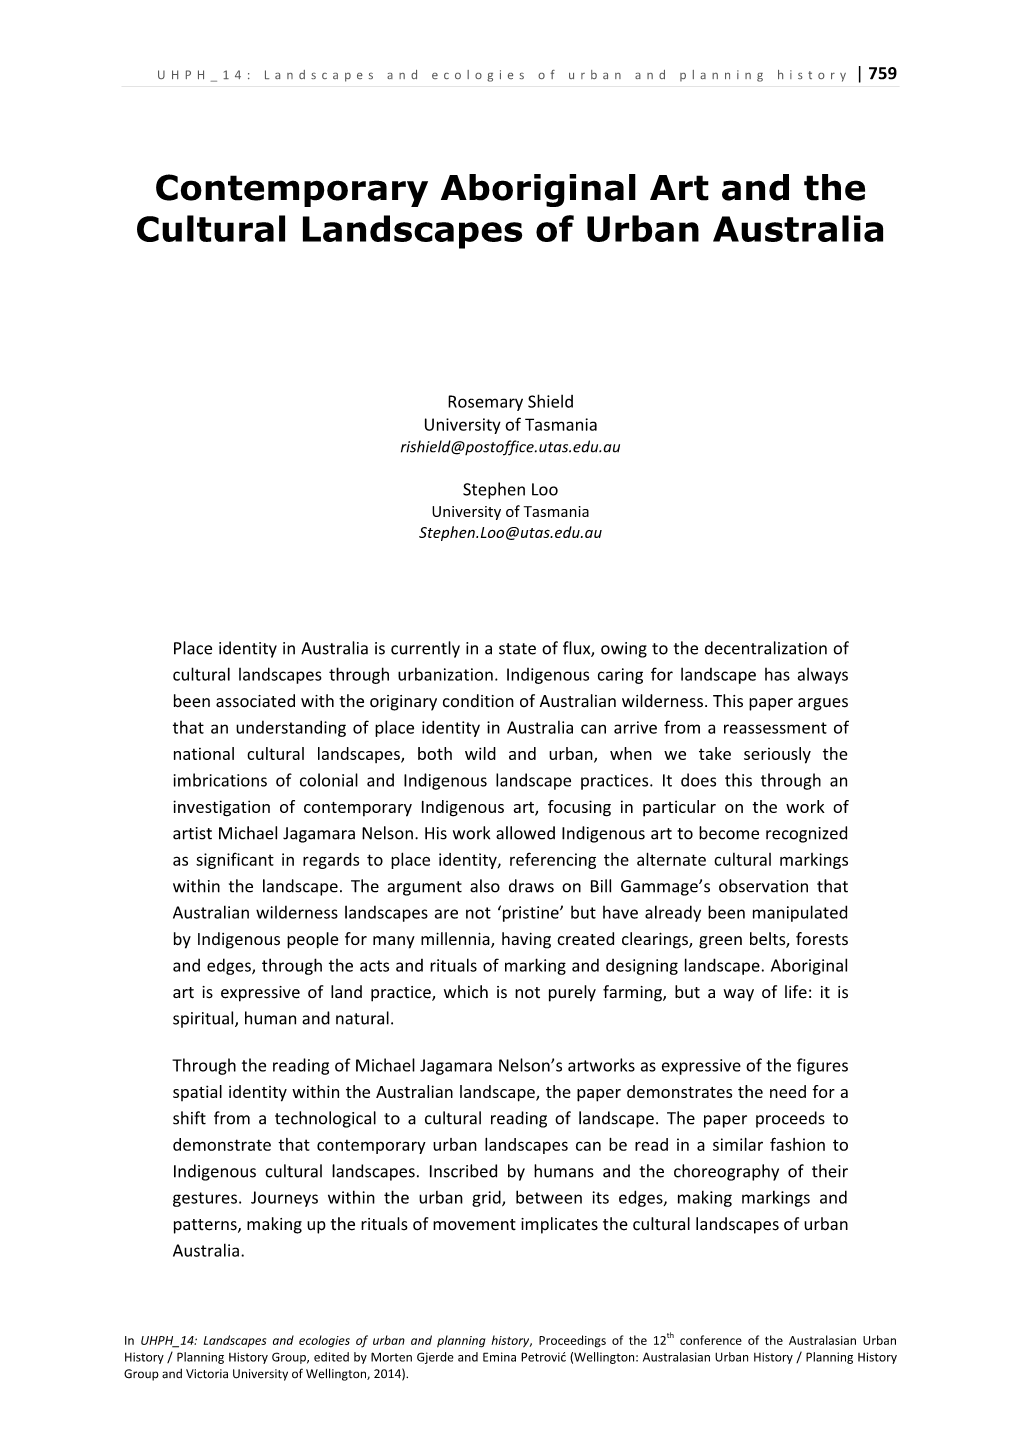 Contemporary Aboriginal Art and the Cultural Landscapes of Urban Australia